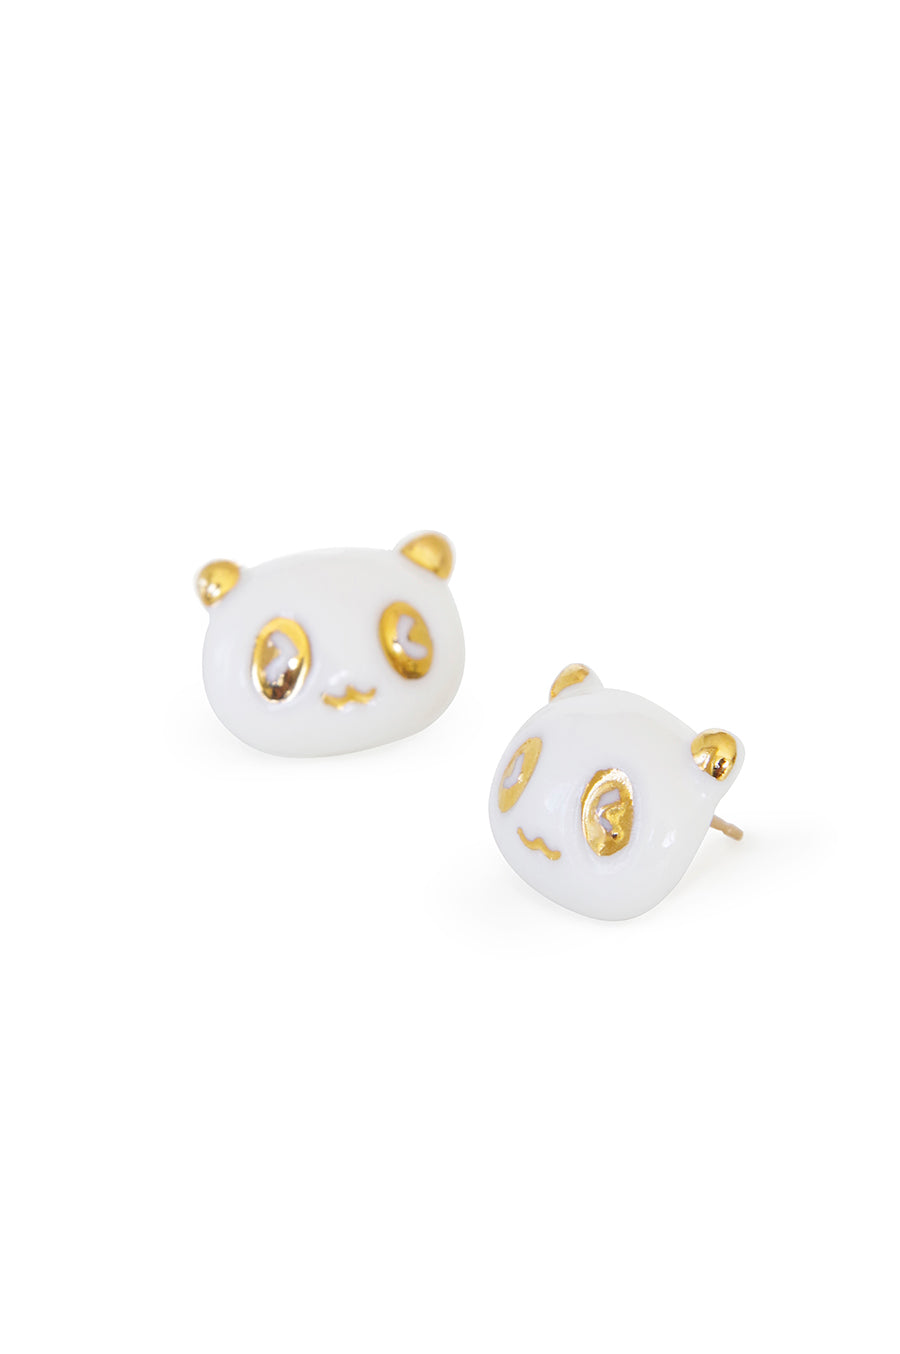 Lucky Panda Stud Earrings